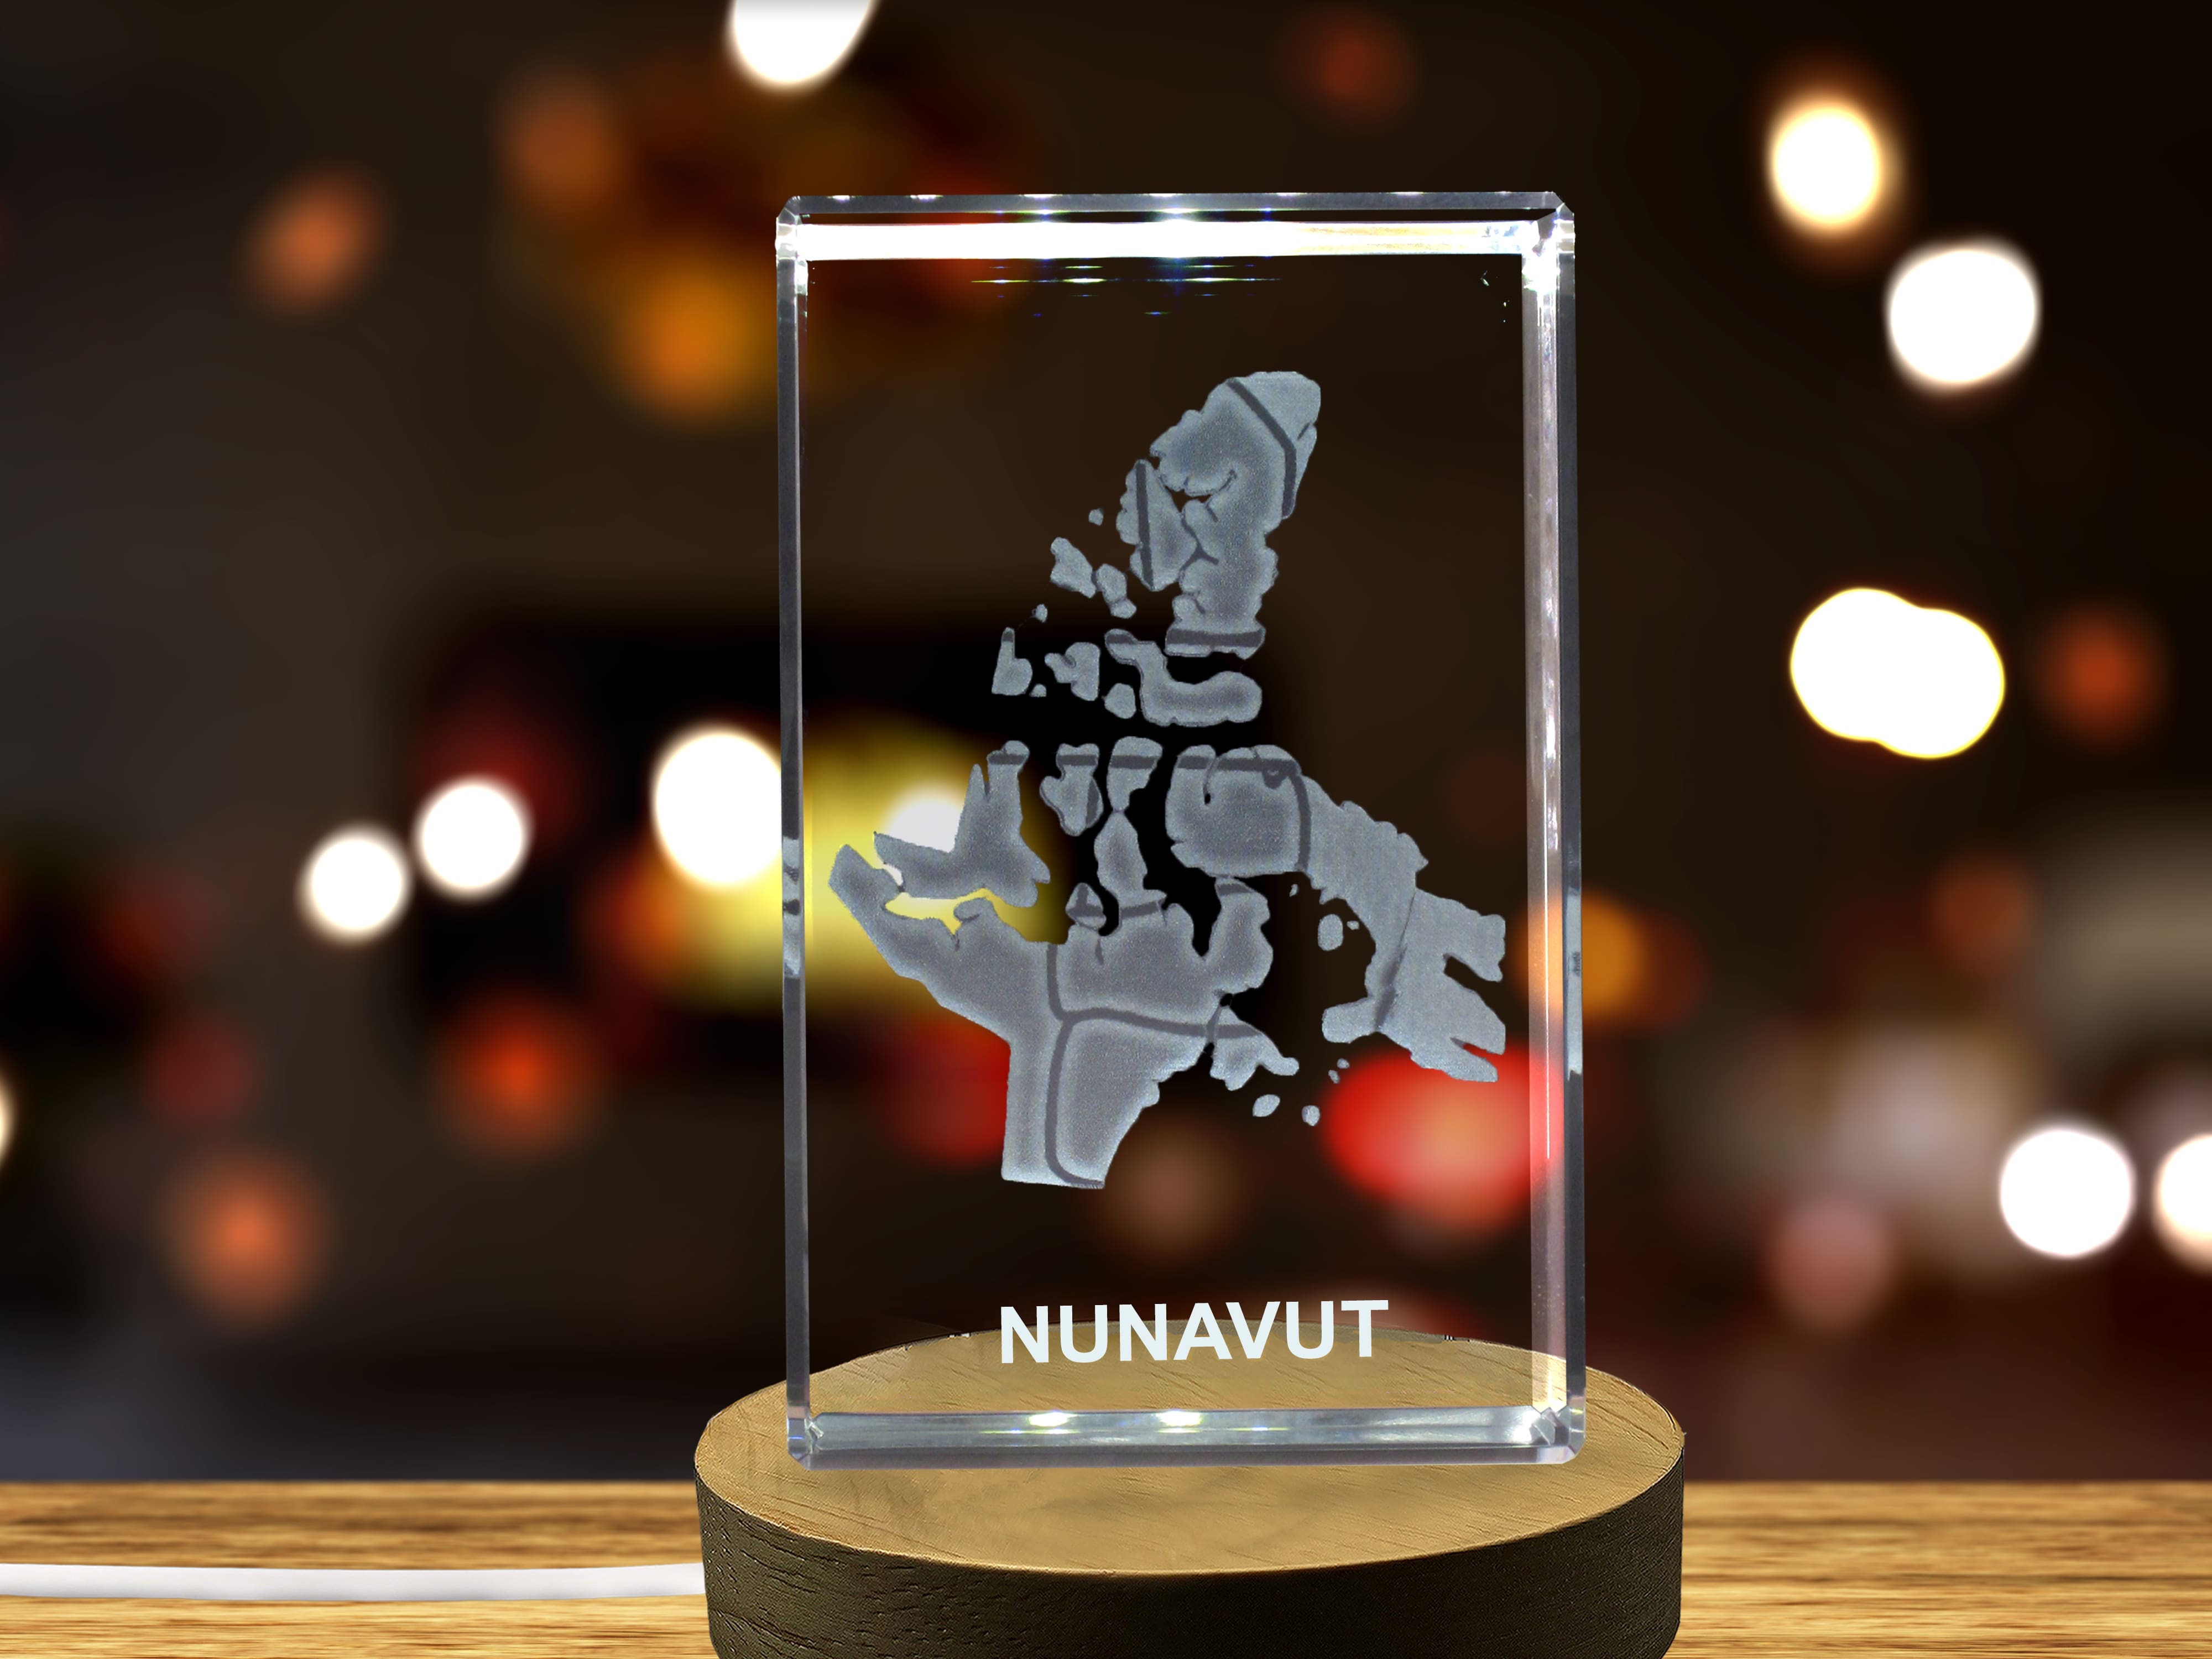 Nunavut 3D Engraved Crystal 3D Engraved Crystal Keepsake/Gift/Decor/Collectible/Souvenir A&B Crystal Collection